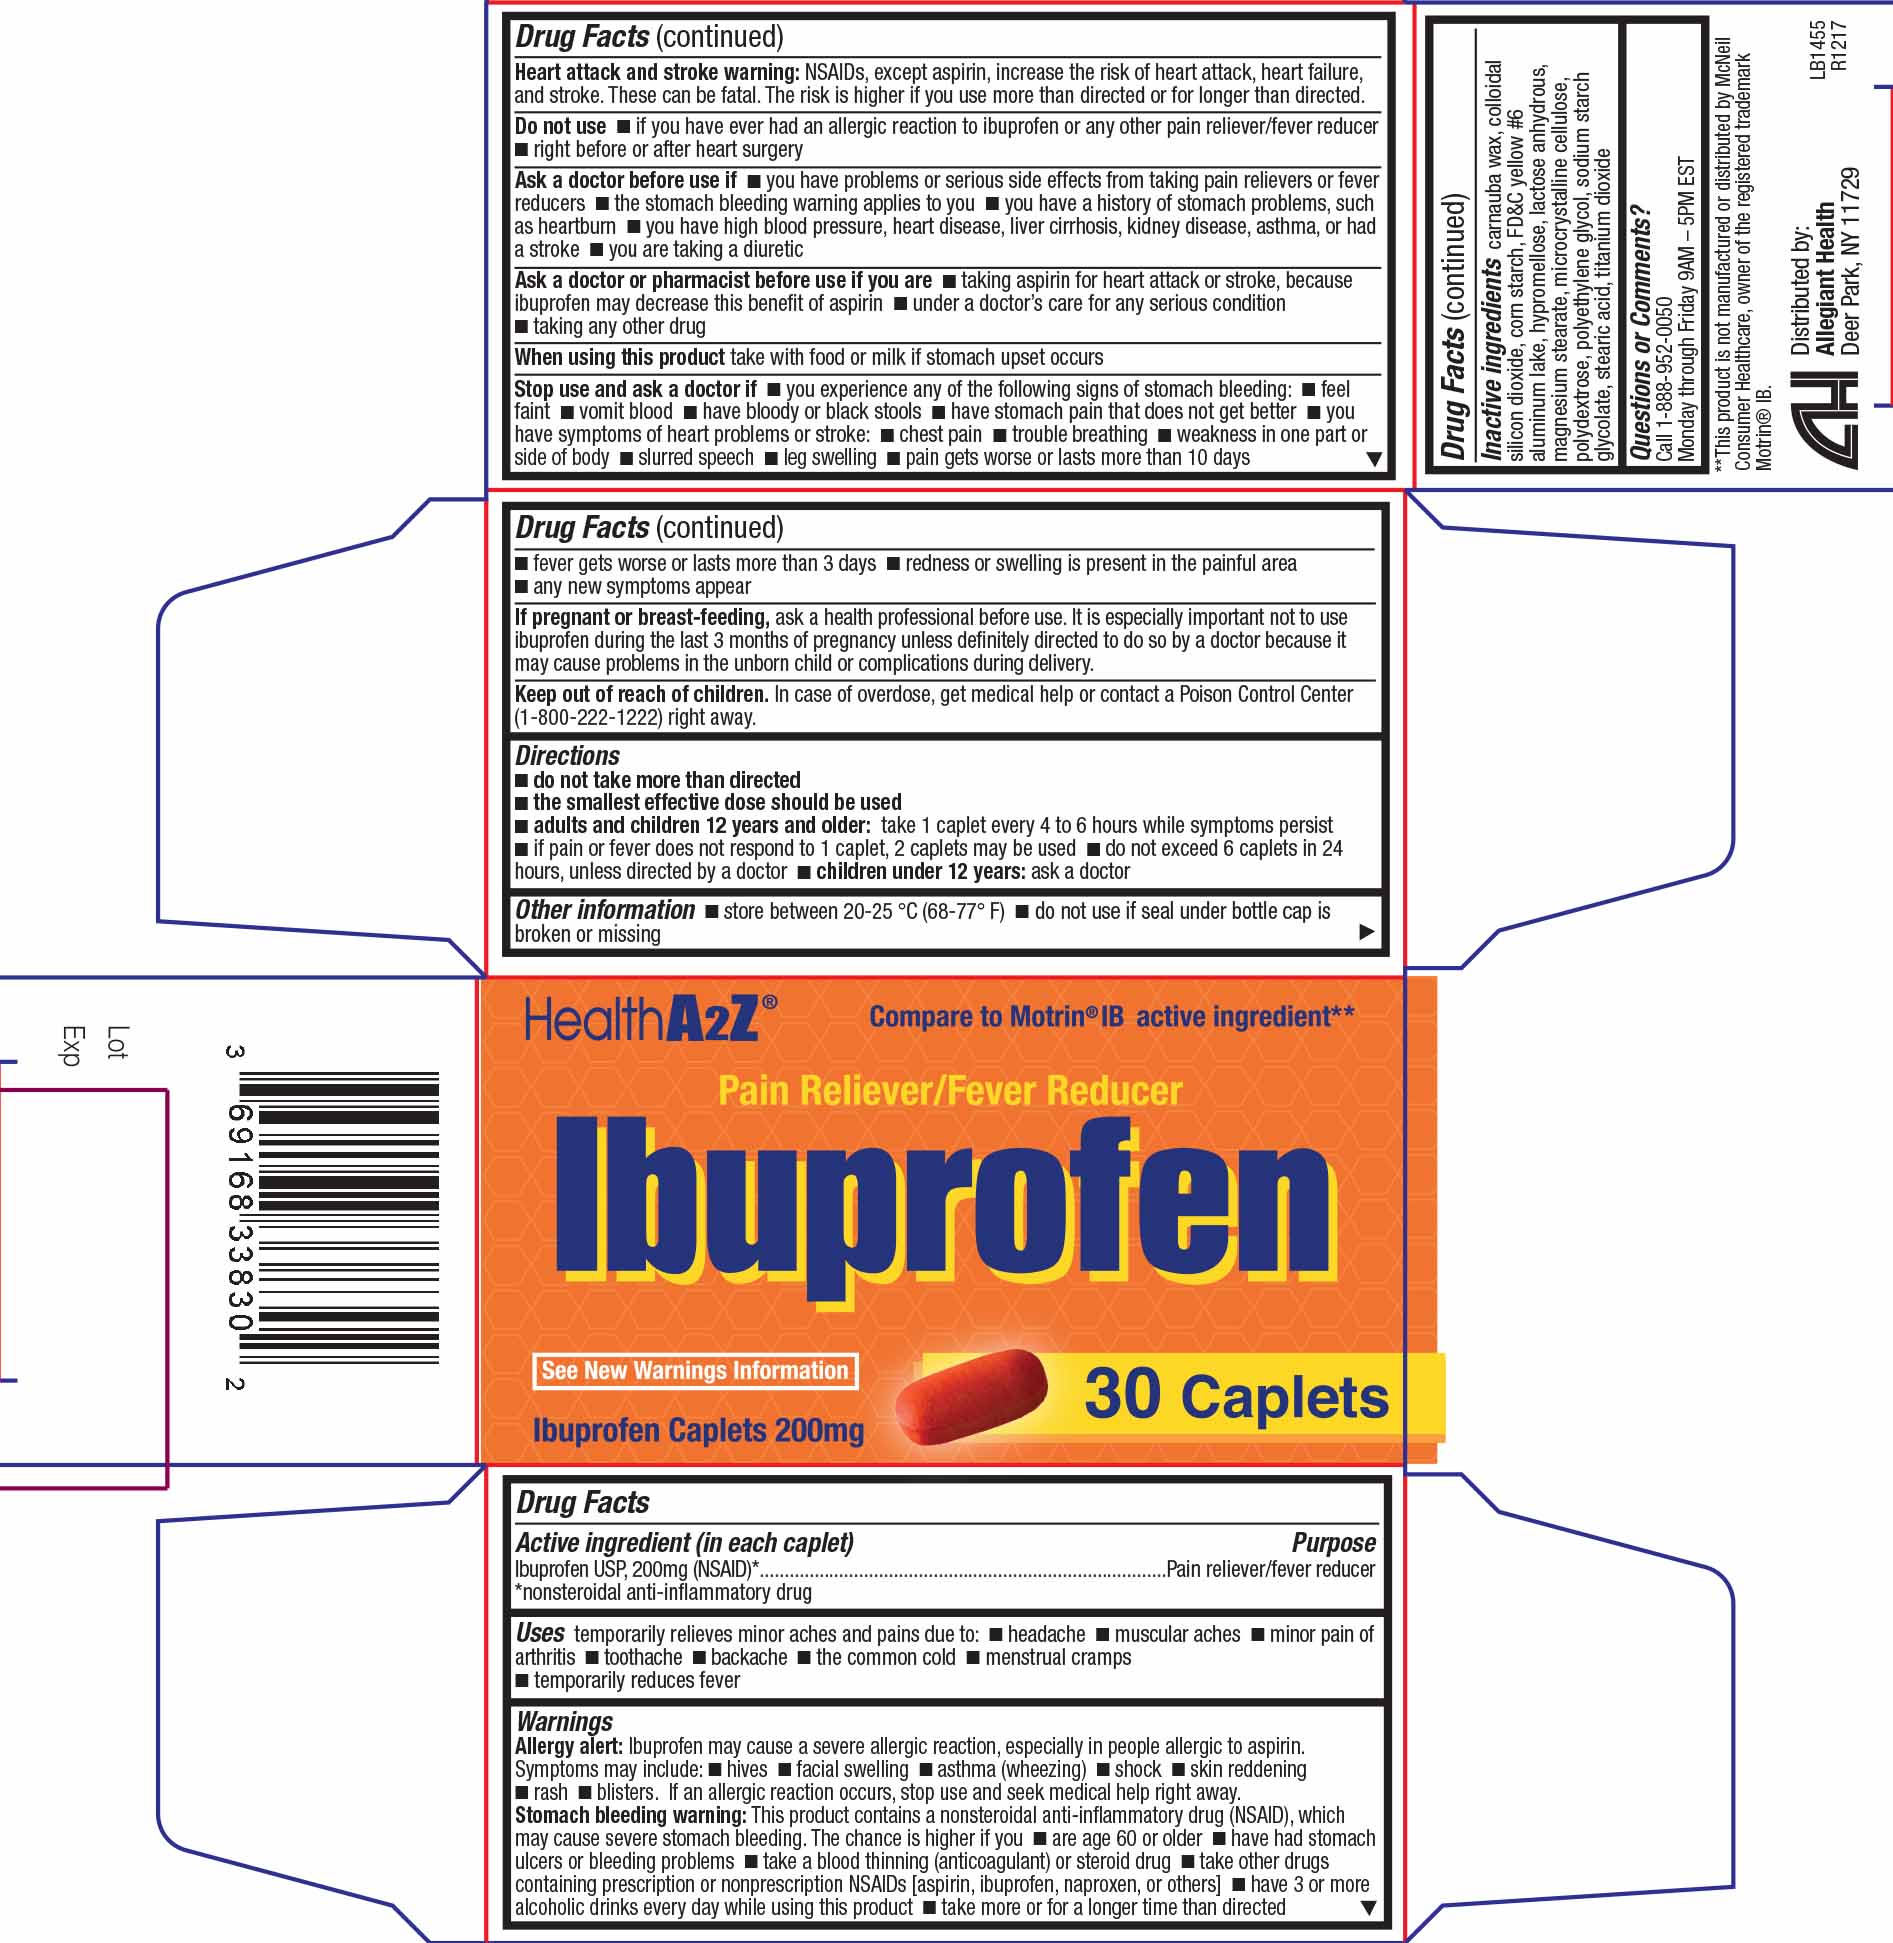 Ibuprofen 200mg Orange